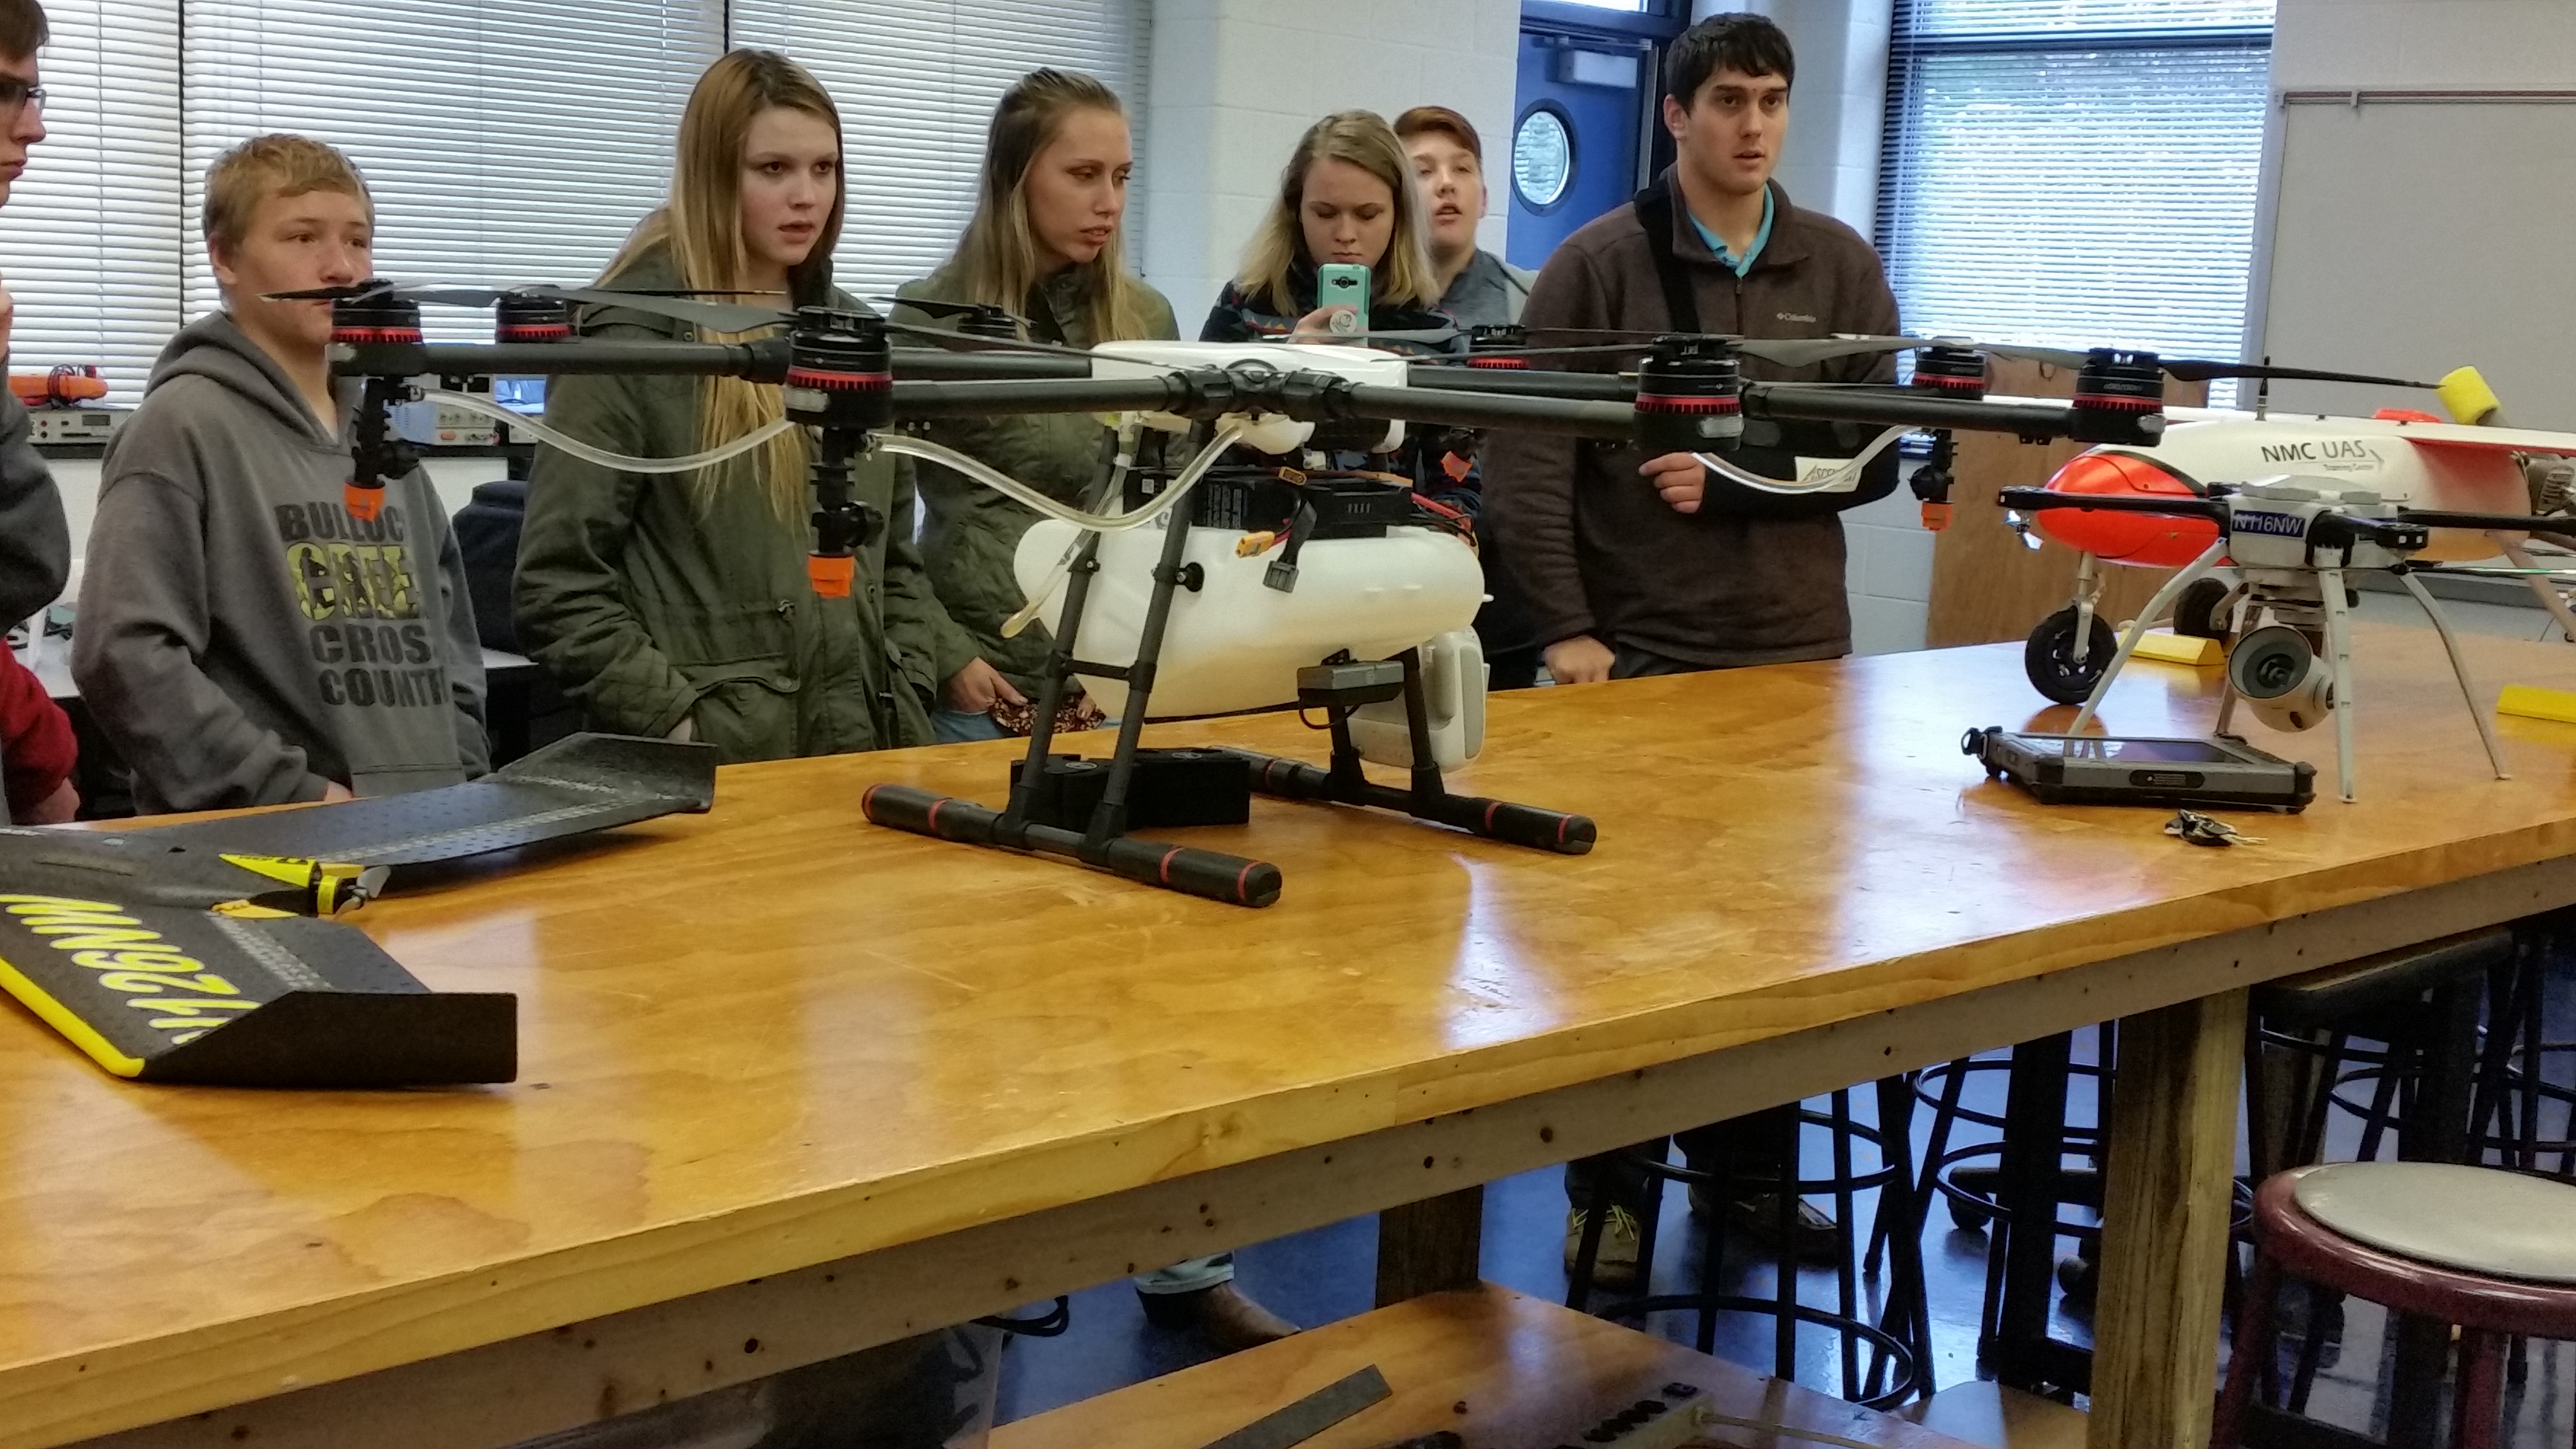 Viewing drone laboratory at Northwestern Michigan College